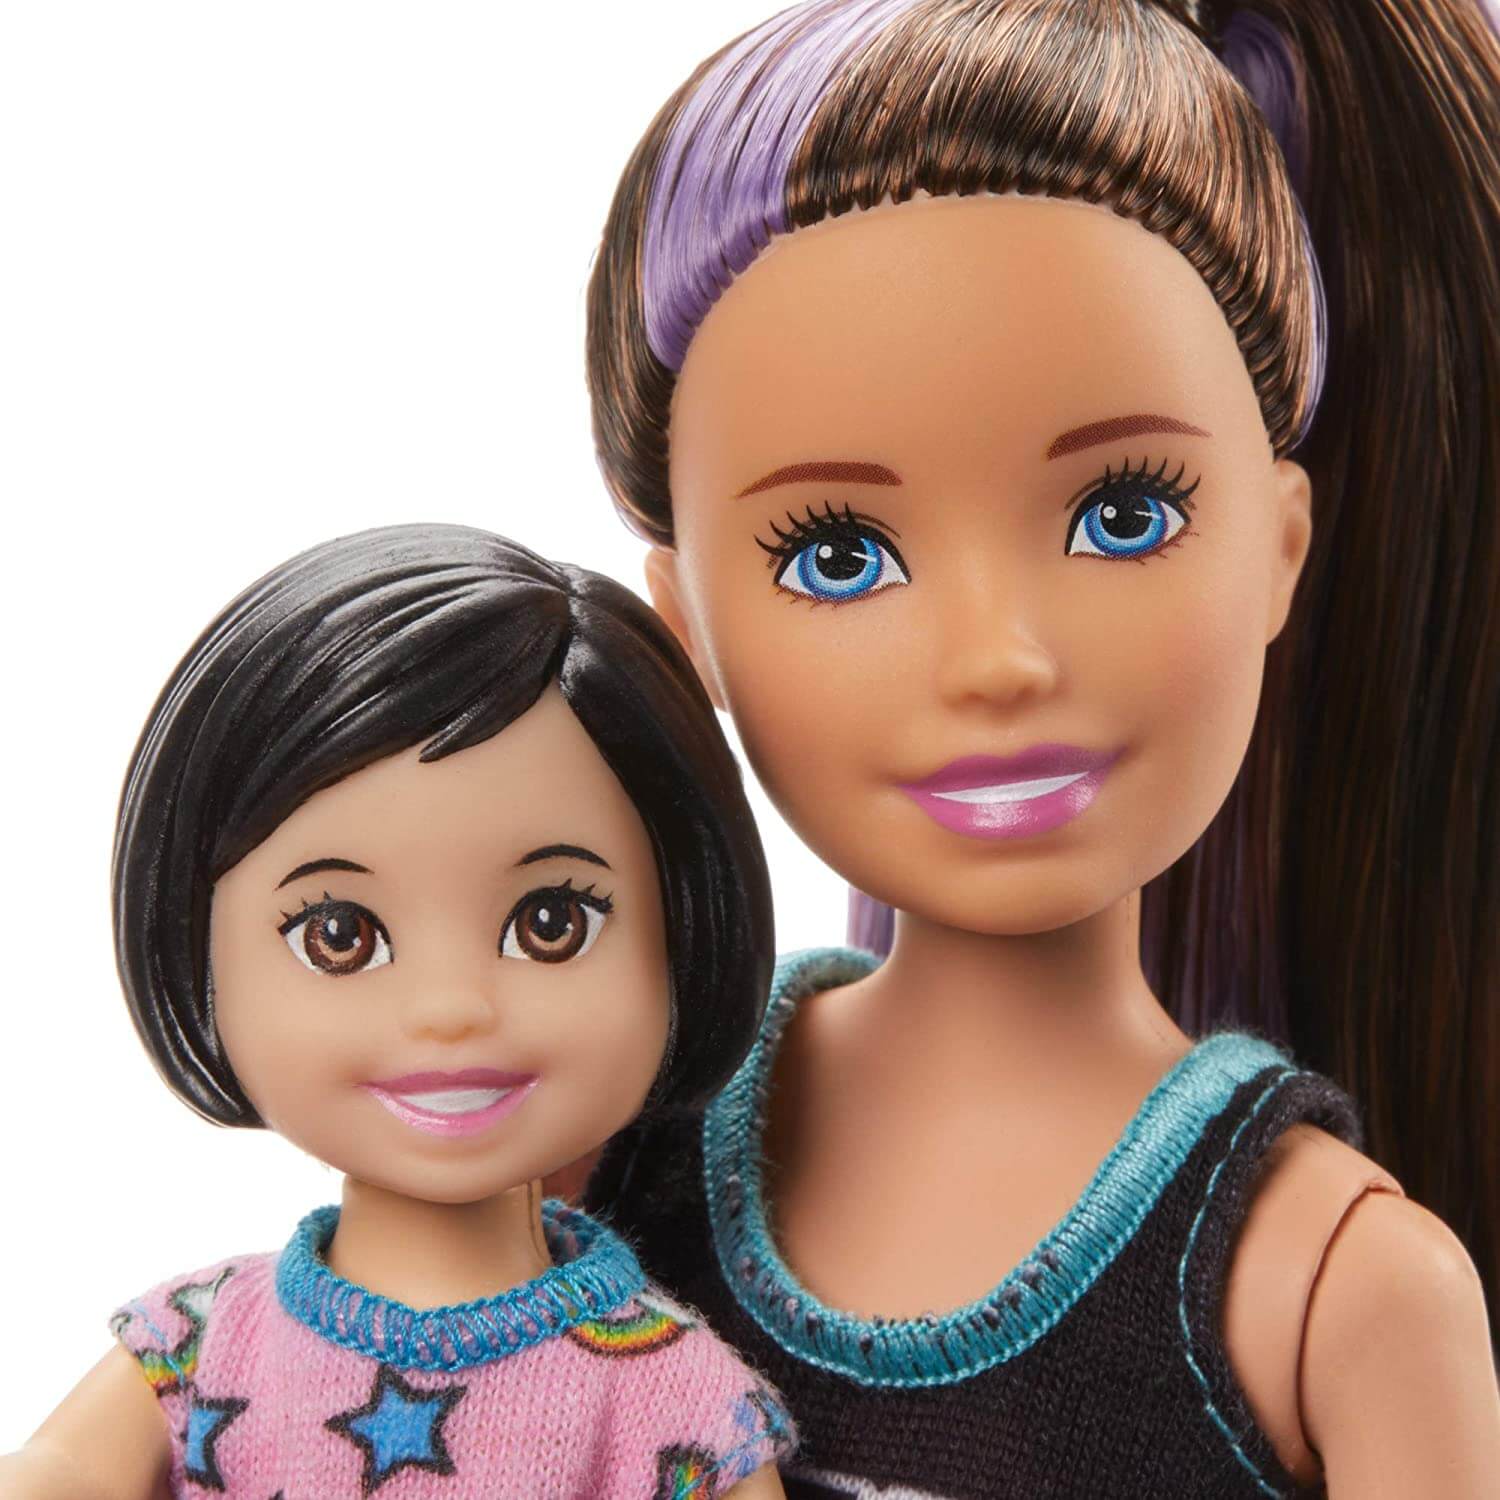 Closeup of the dolls.